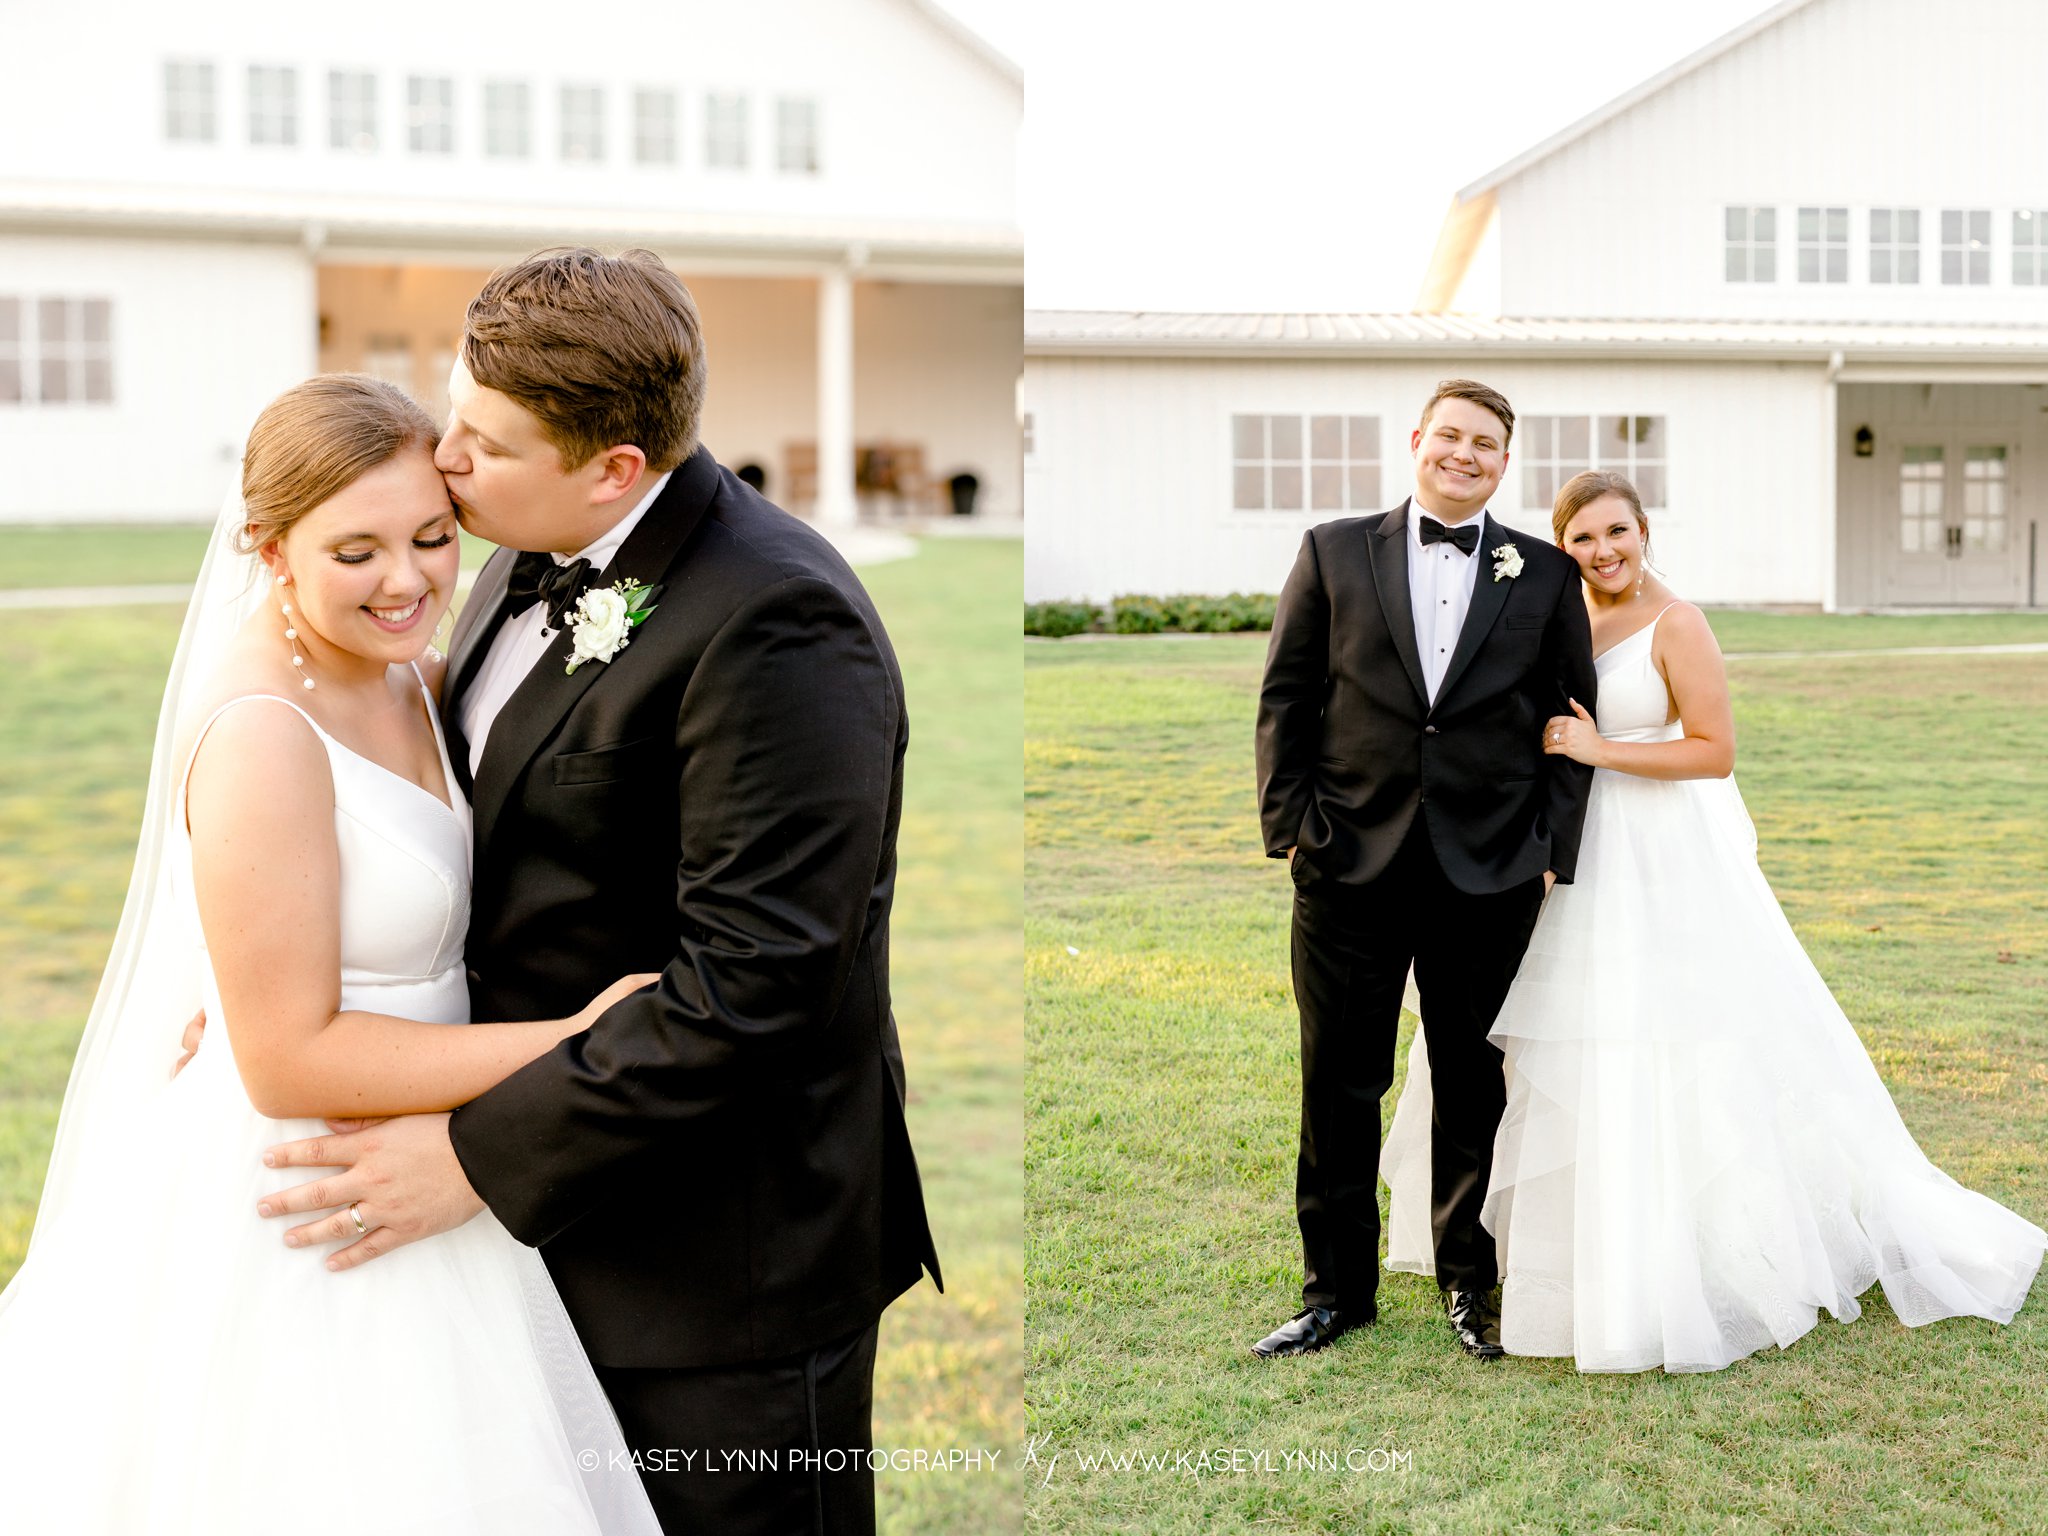 Texas Wedding Photographer / Kasey Lynn Photography